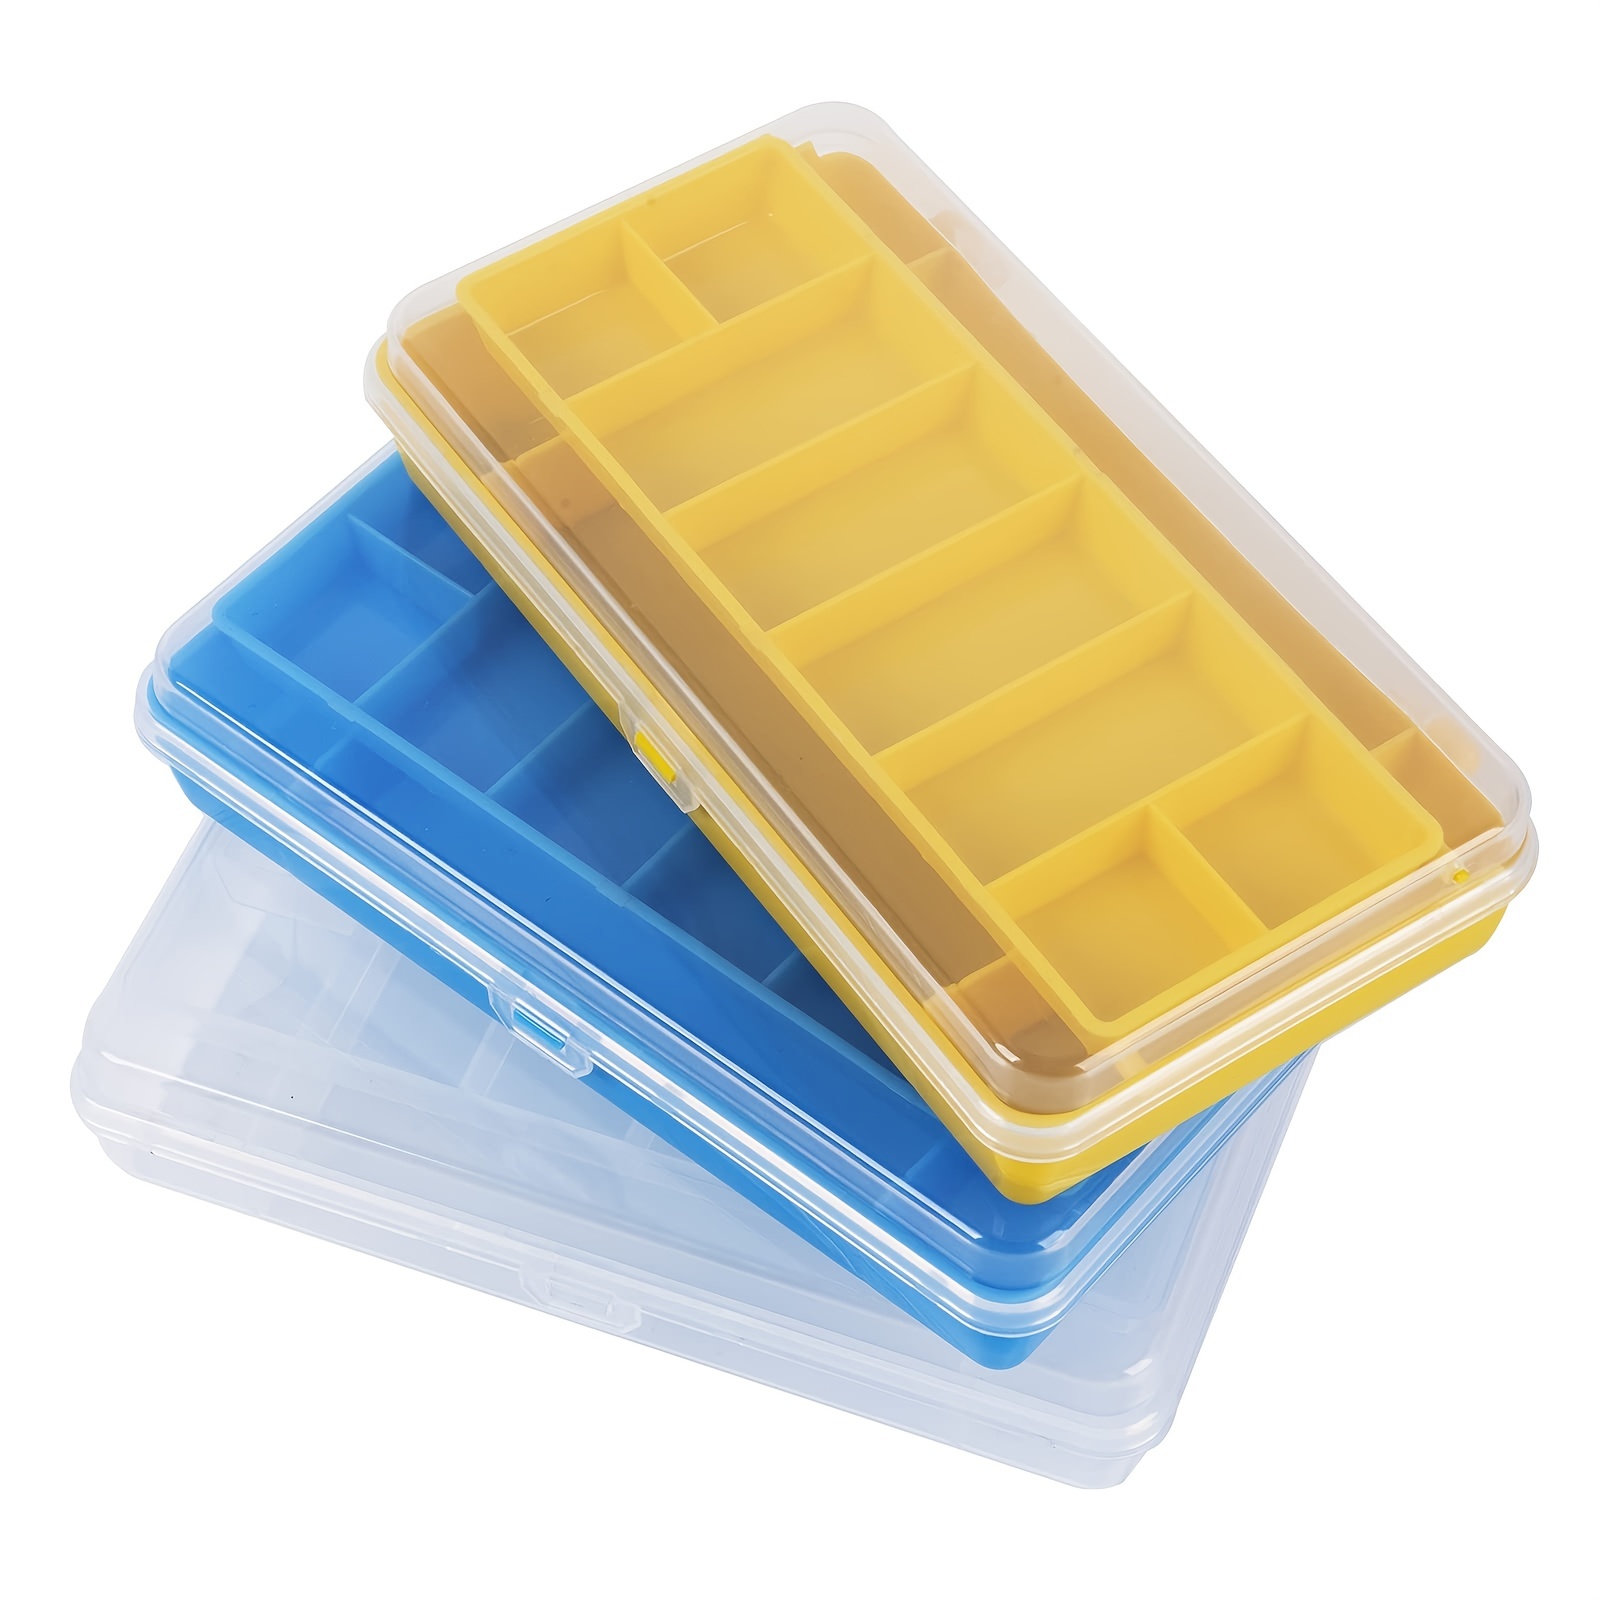 Goture Waterproof Tackle Boxes, Plastic Storage Organizer Box